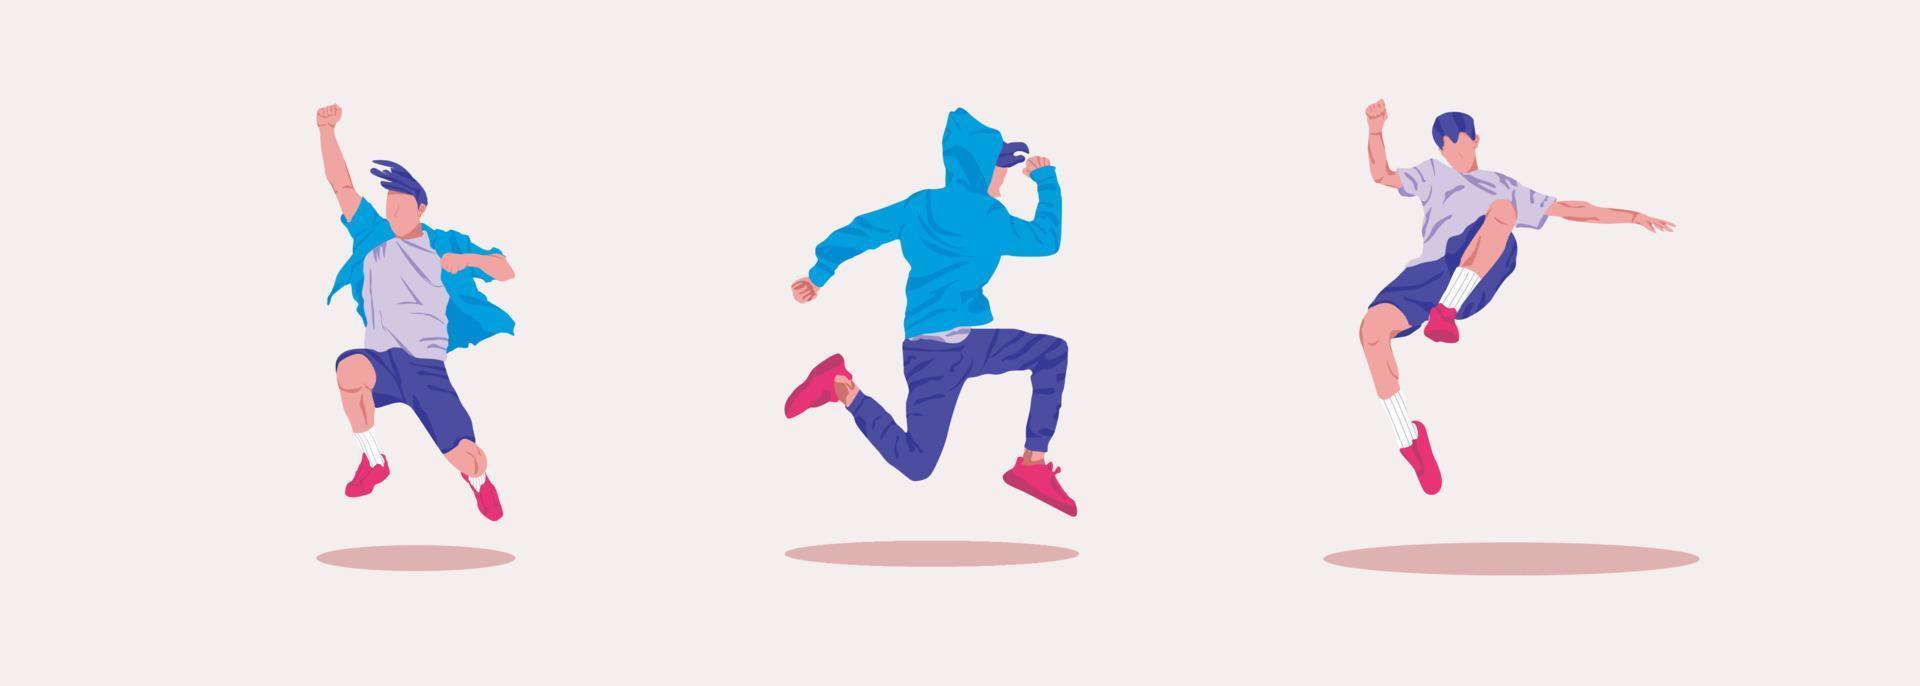 jumping person illustration design vector